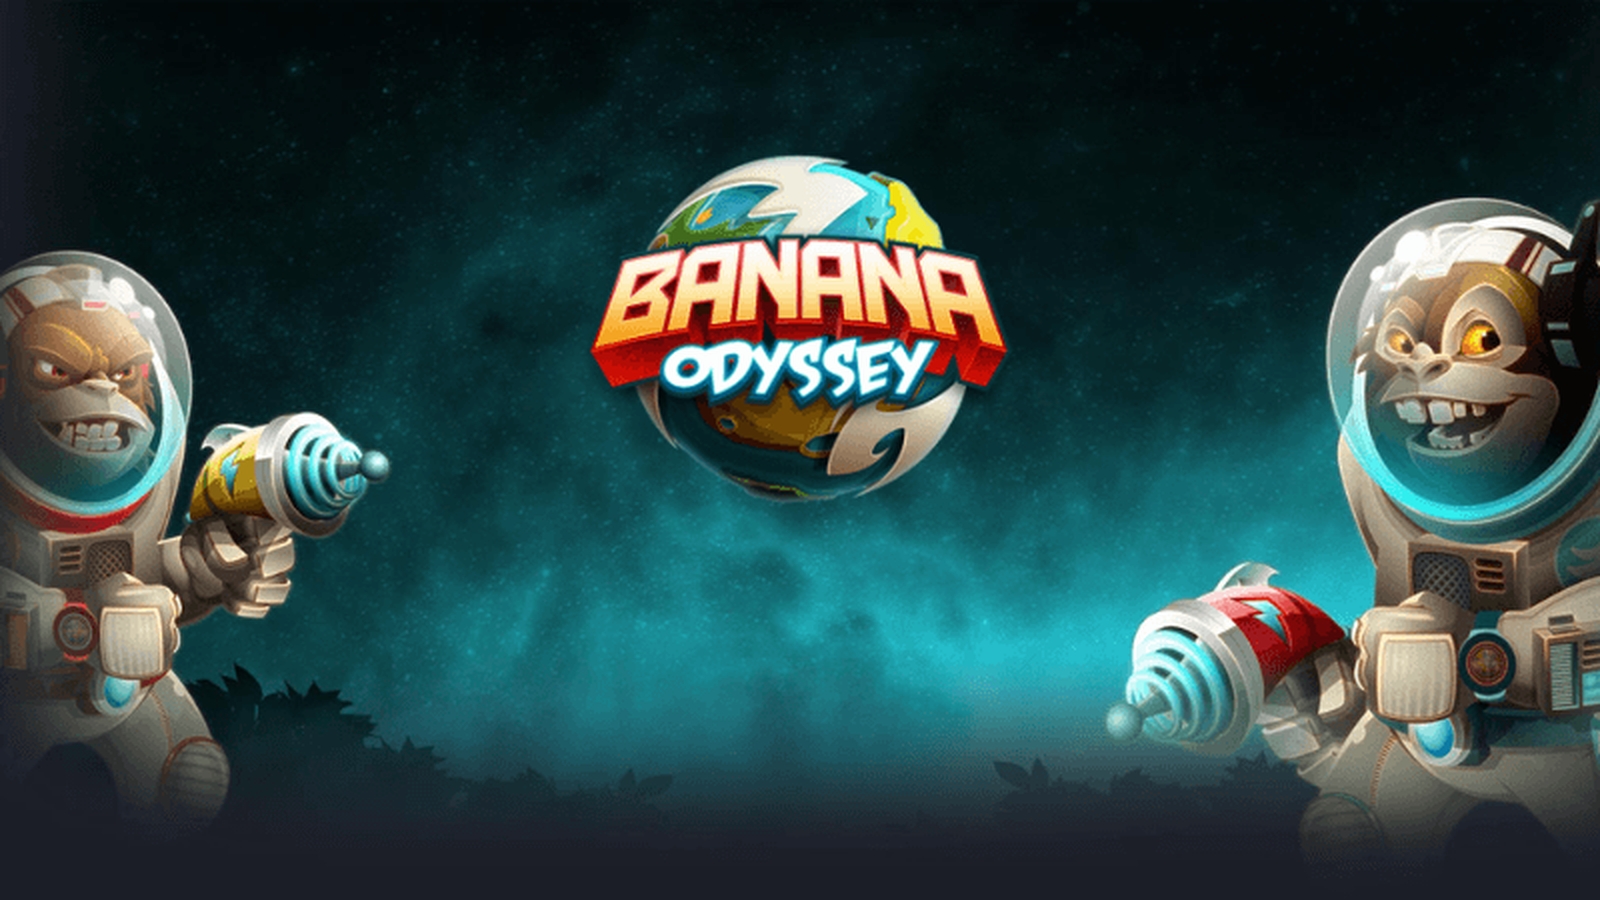 The Banana Odyssey Online Slot Demo Game by Slingshot Studios